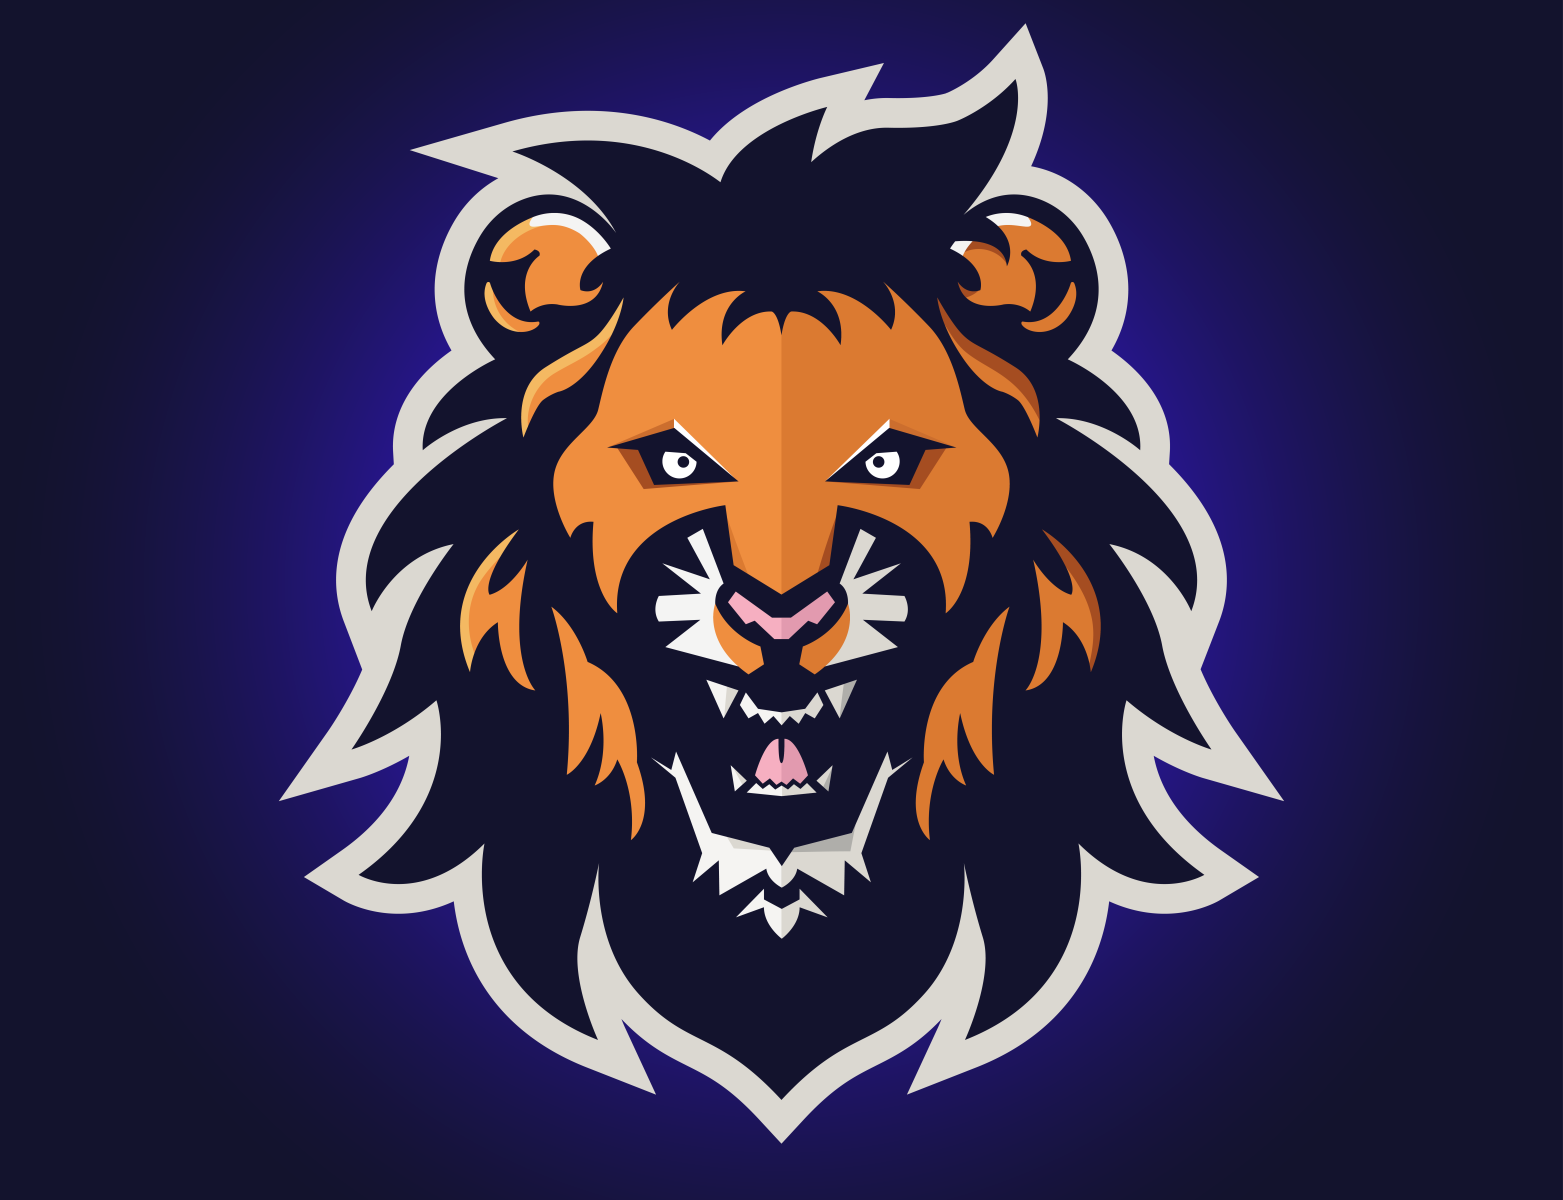 LION logo by Urte on Dribbble